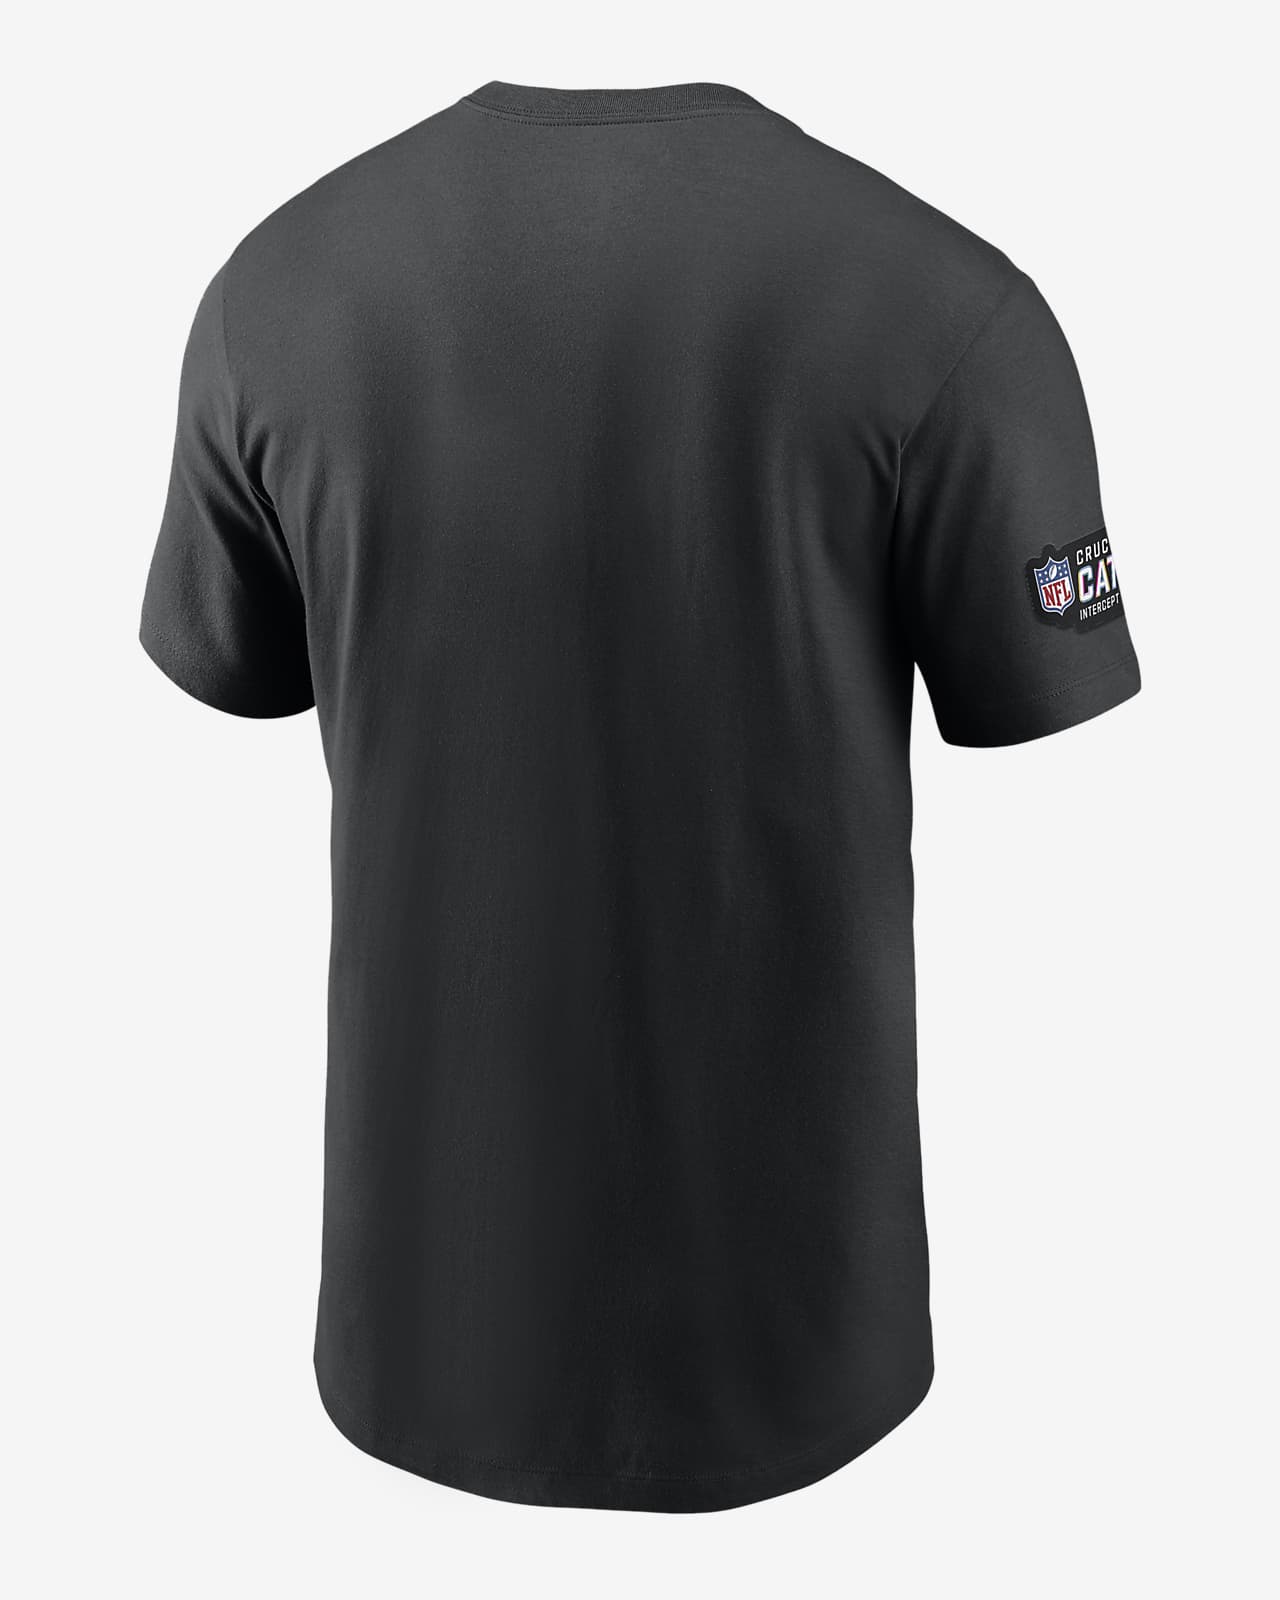 New York Jets Crucial Catch Sideline Men's Nike NFL T-Shirt.